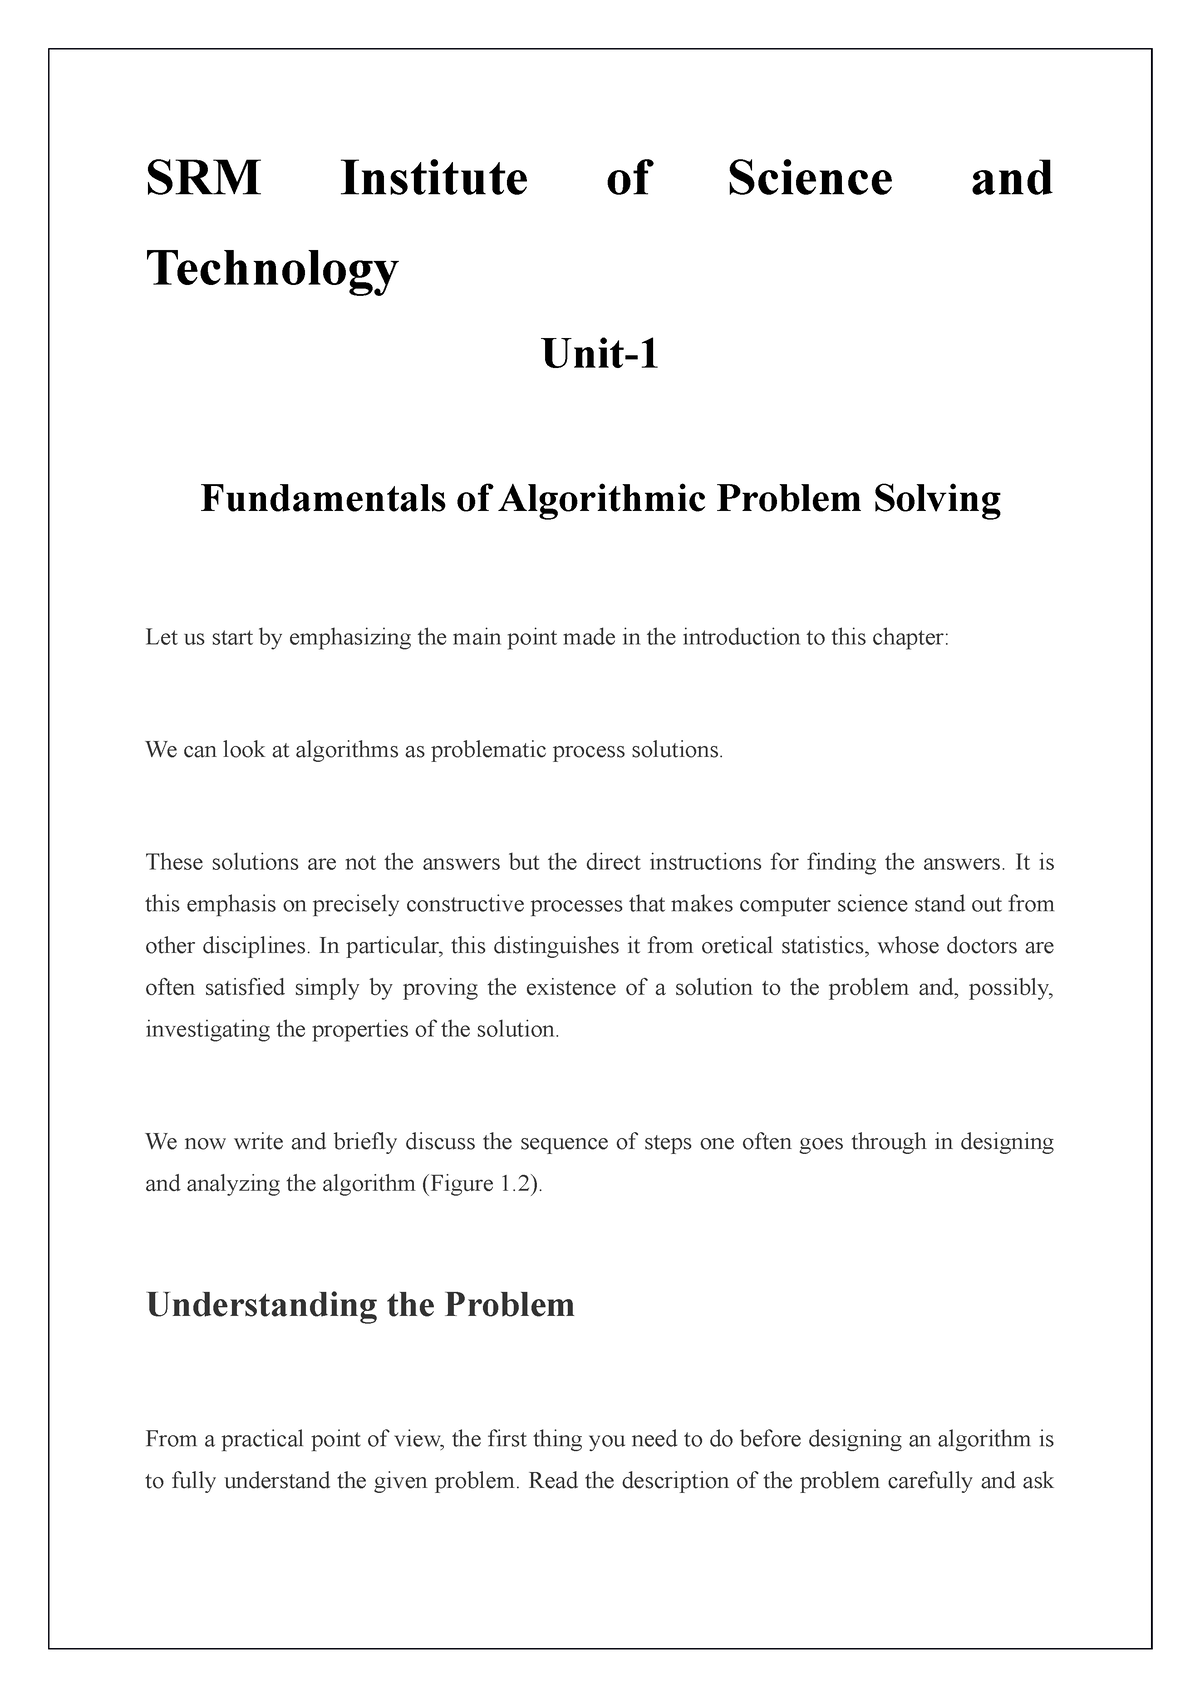 write short note on fundamentals of algorithmic problem solving